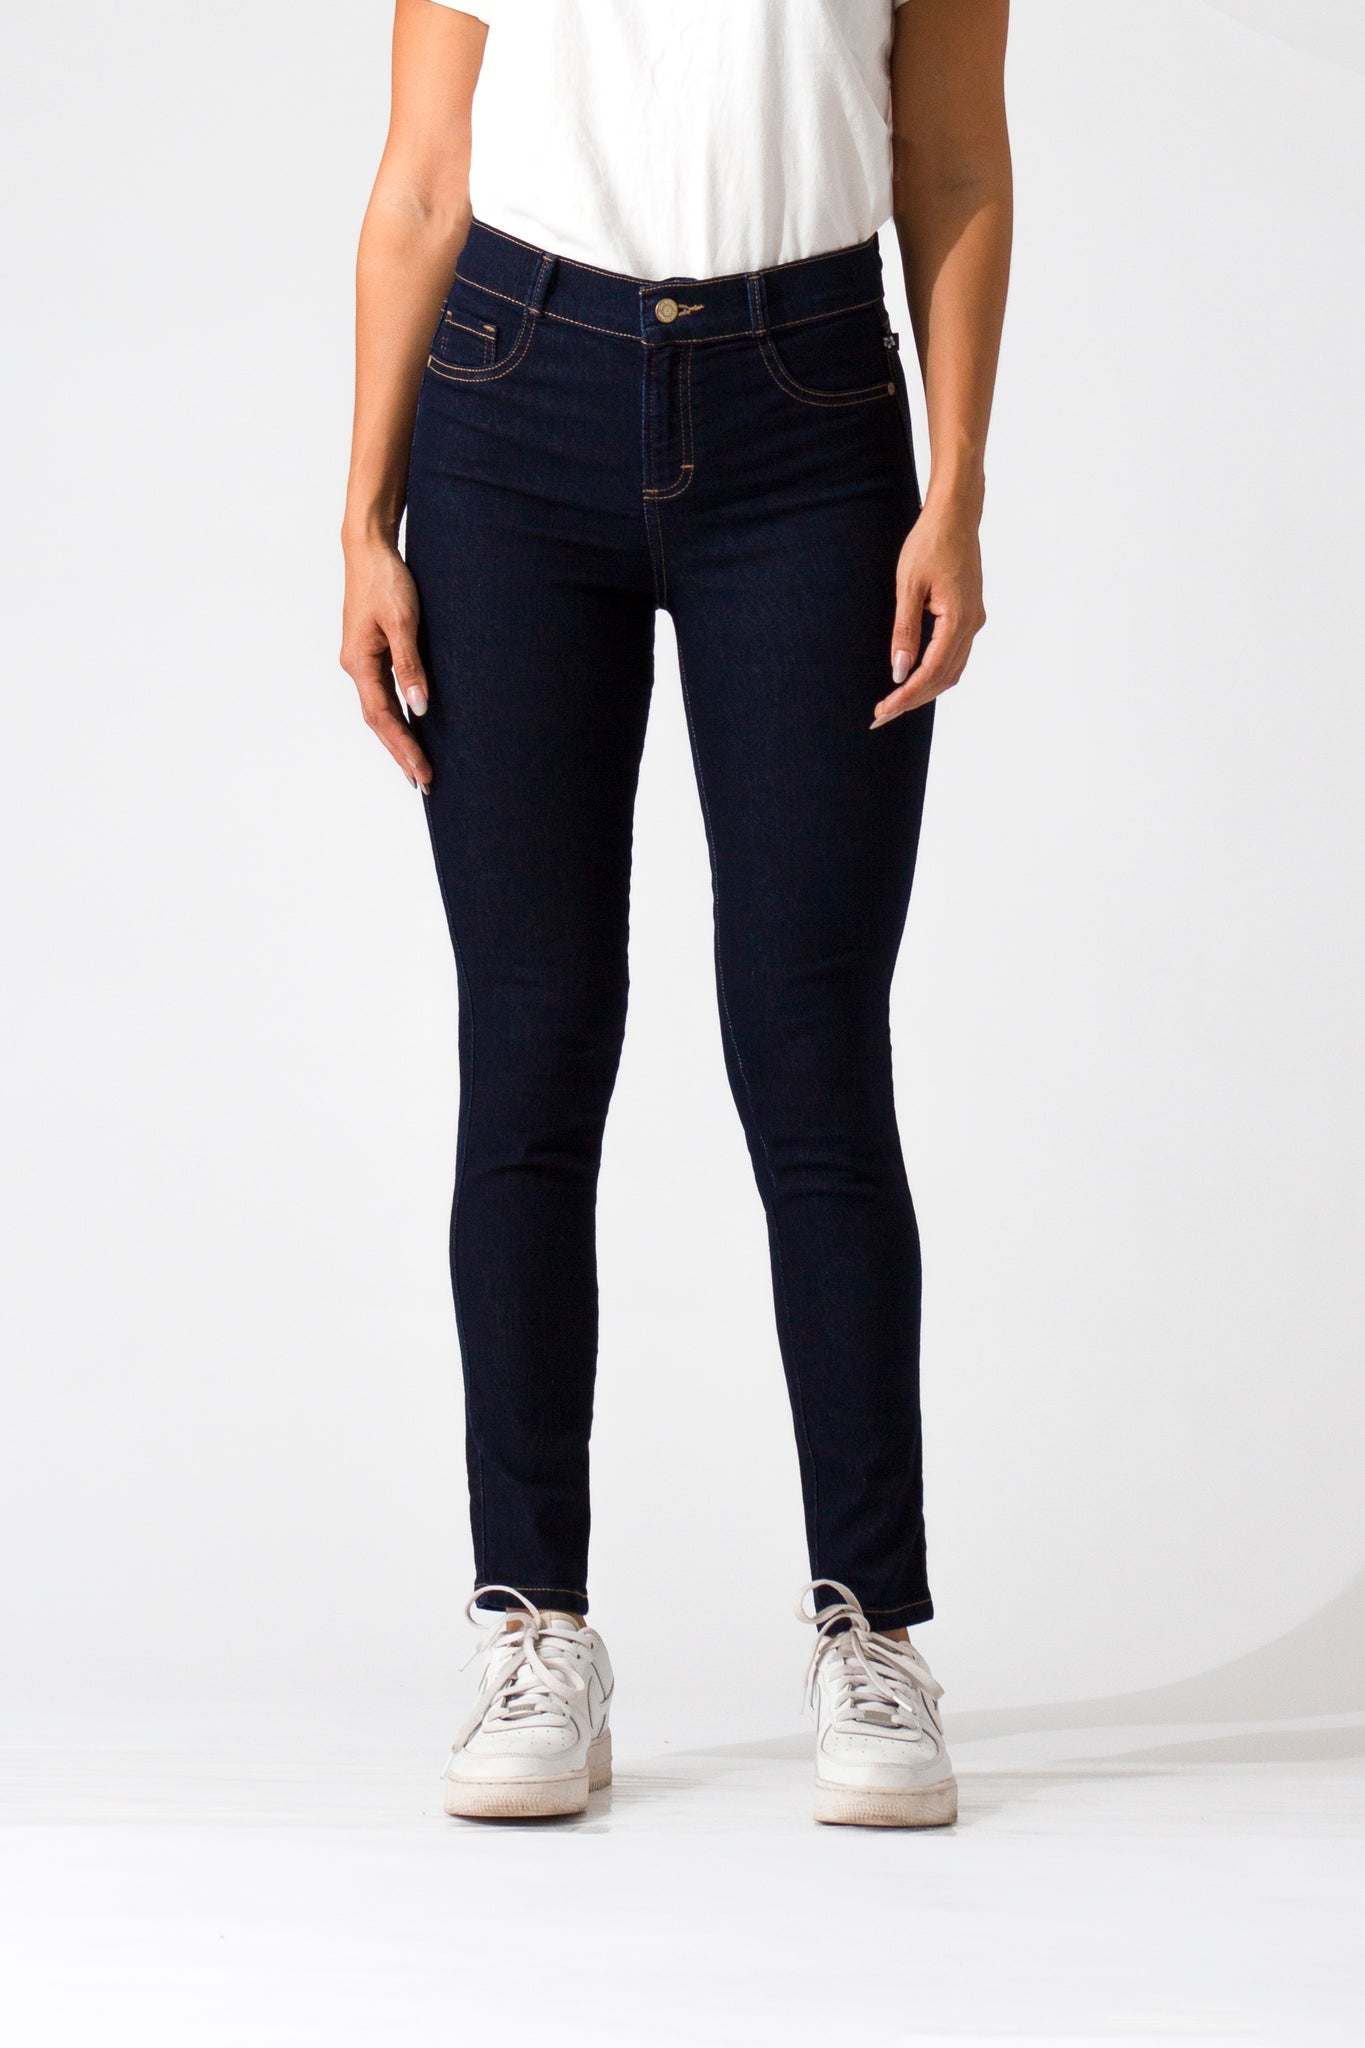 OHPOMP!® Basics, Cintura Media Skinny Jeans Azul Oscuro D1010